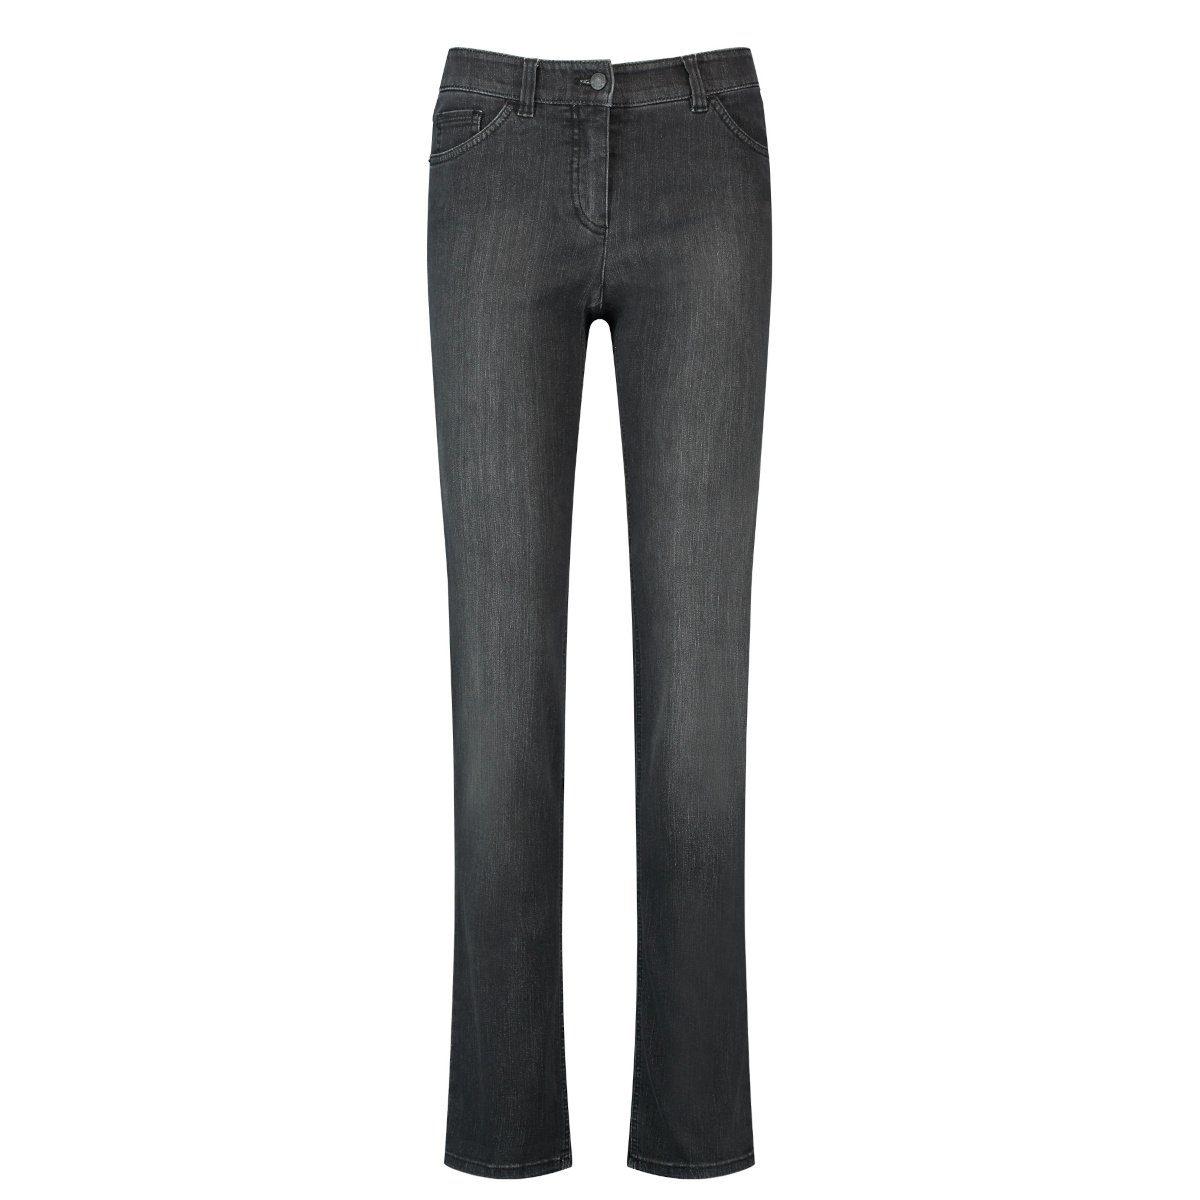 Gerry Best4ME Fit grey (92150-67950) von WEBER denim Perfect Organic Weber 5-Pocket-Jeans Cotton GERRY (134002)